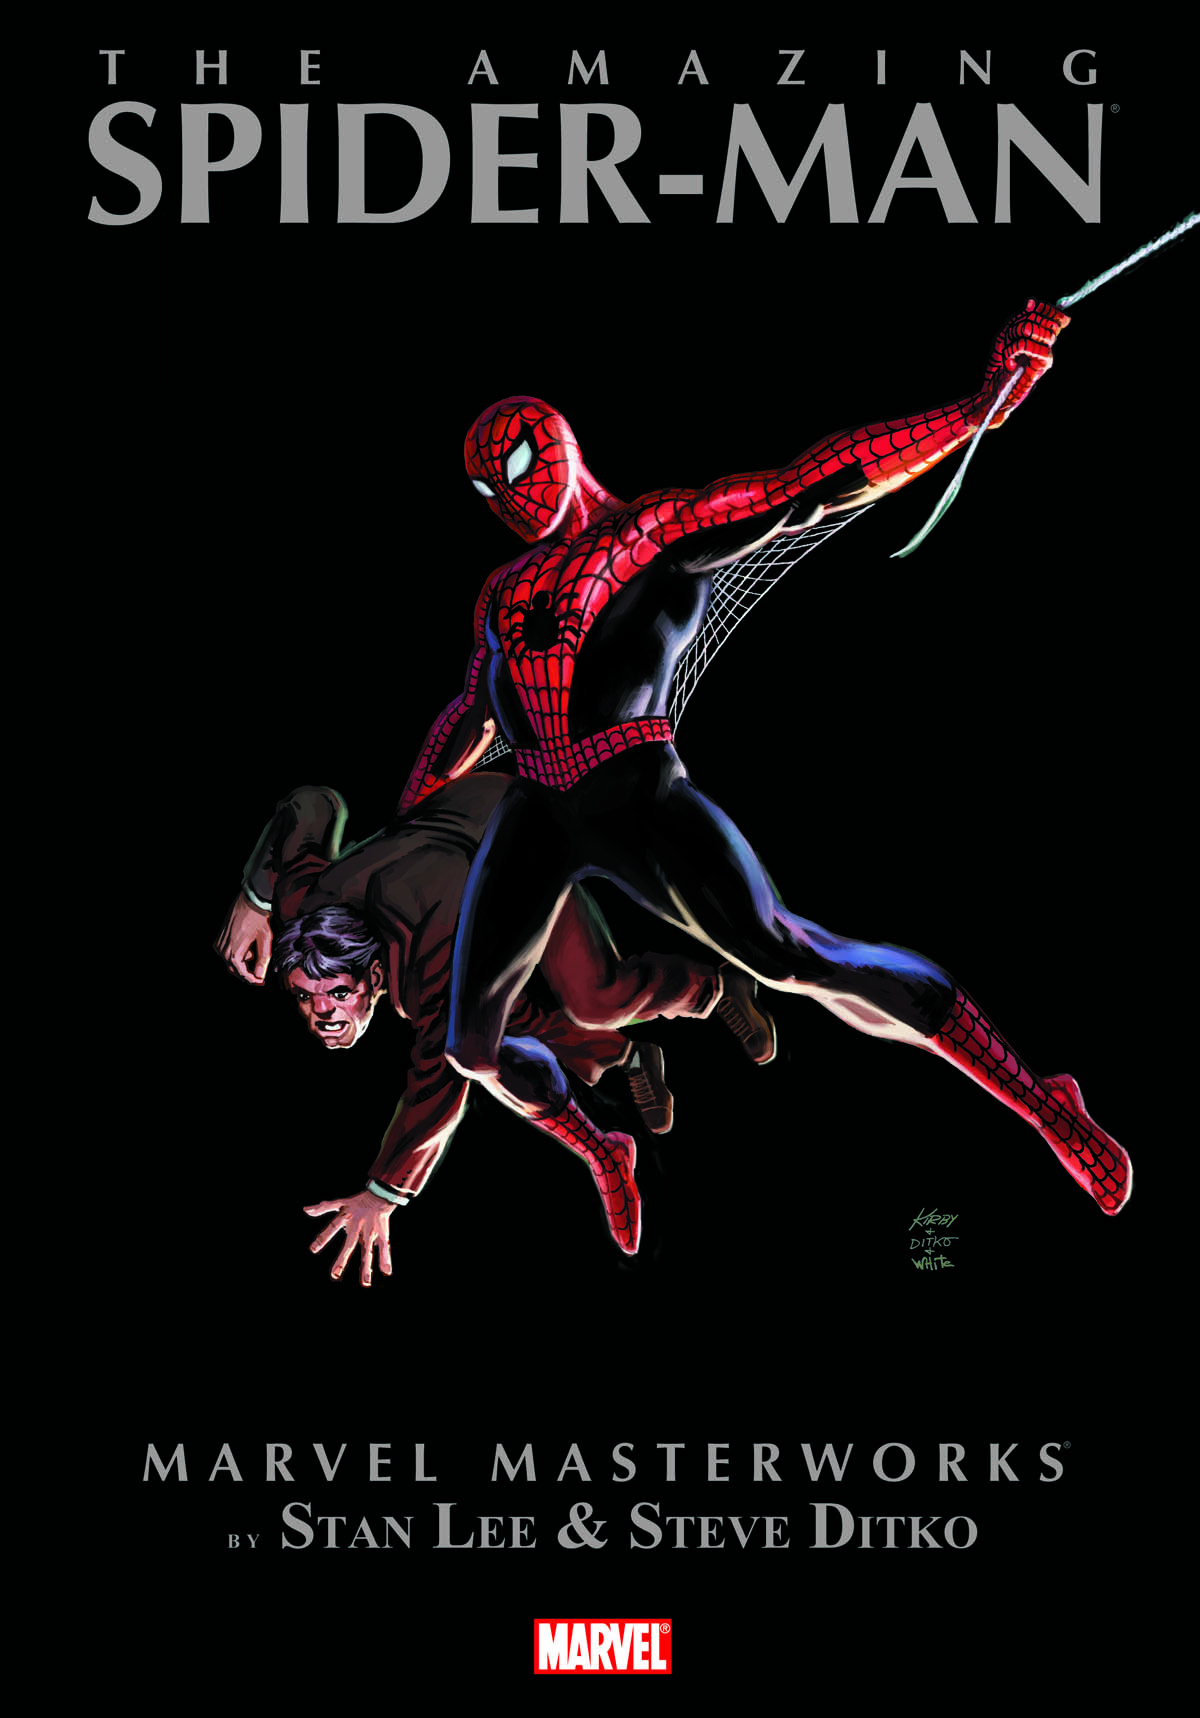 Marvel Masterworks: The Amazing Spider-Man Vol. 1 (Reprint) (Trade Paperback)